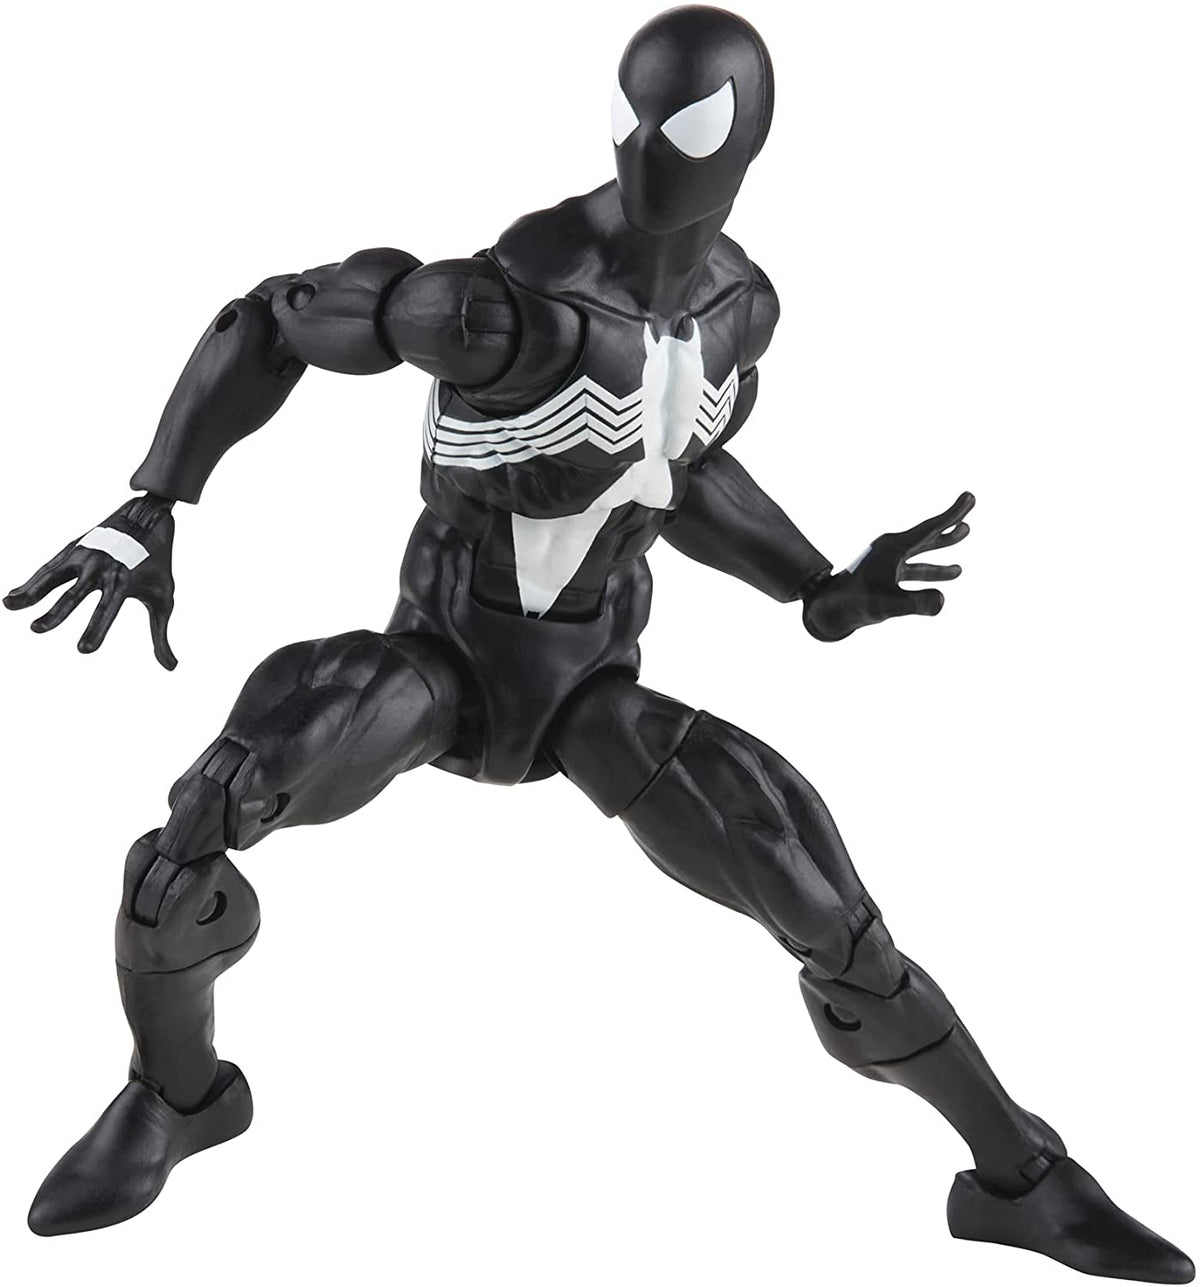 Spider-Man Marvel Legends Series 6-inch Symbiote Action Figure Toy